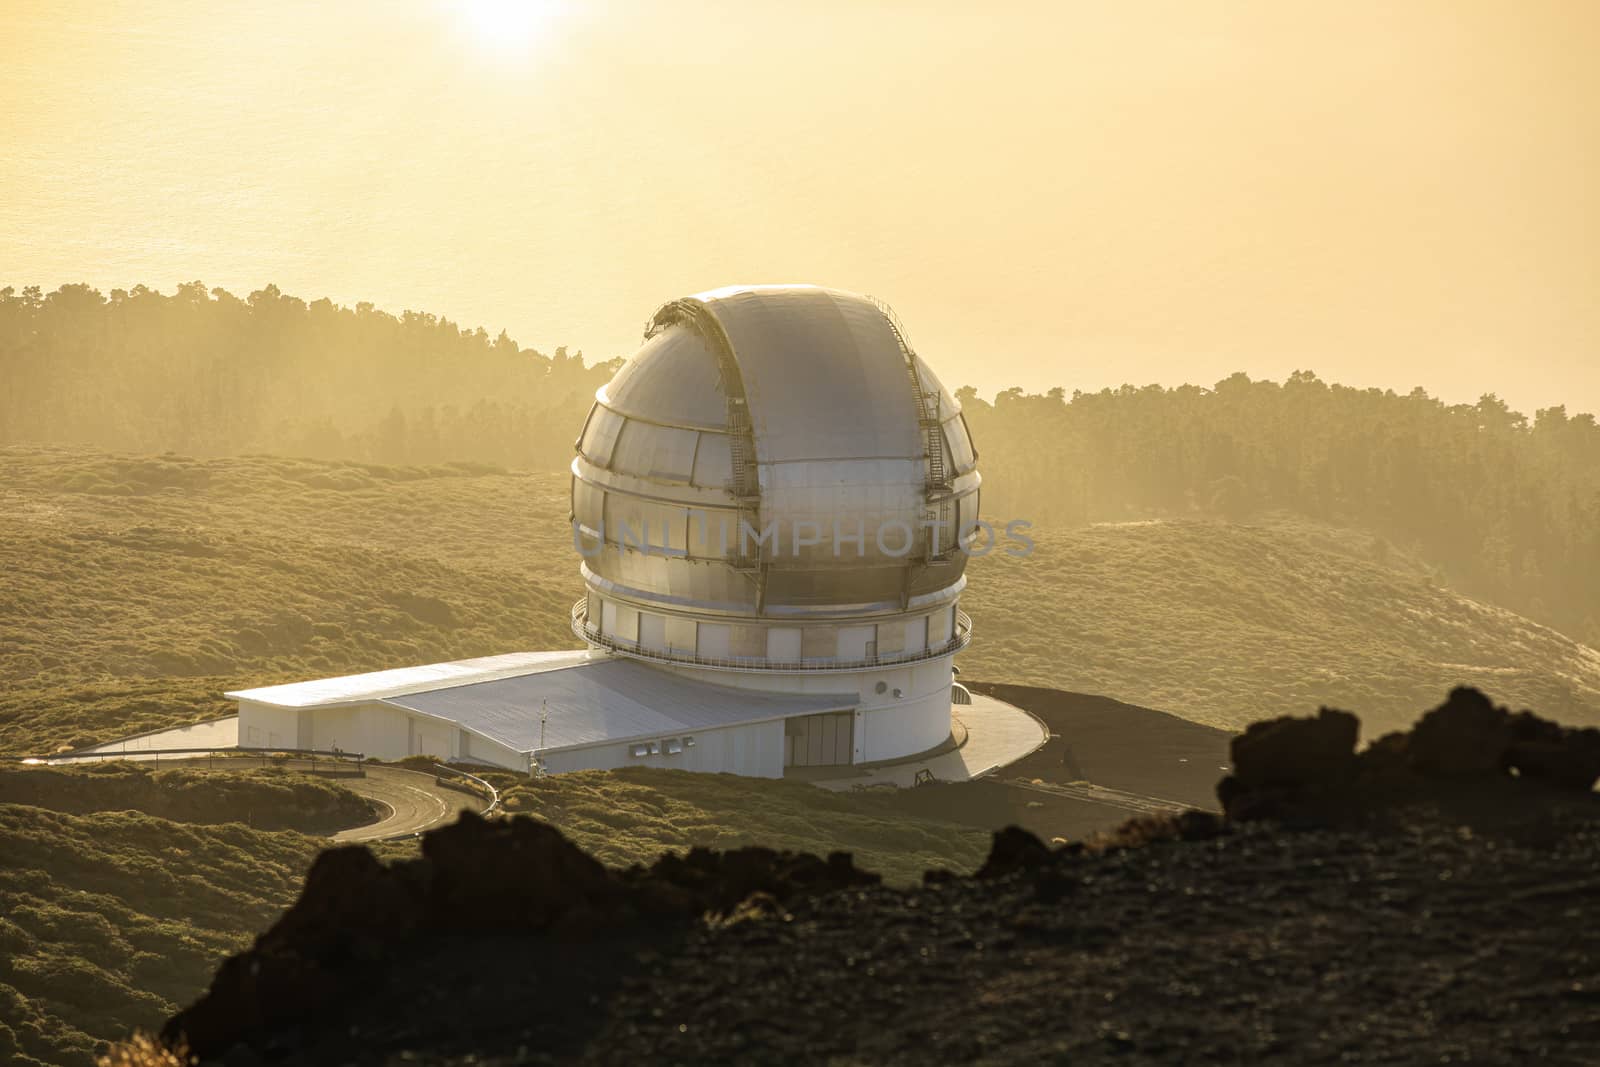 Gran Telescopio in La Palma, Canary Islands, Spain by COffe